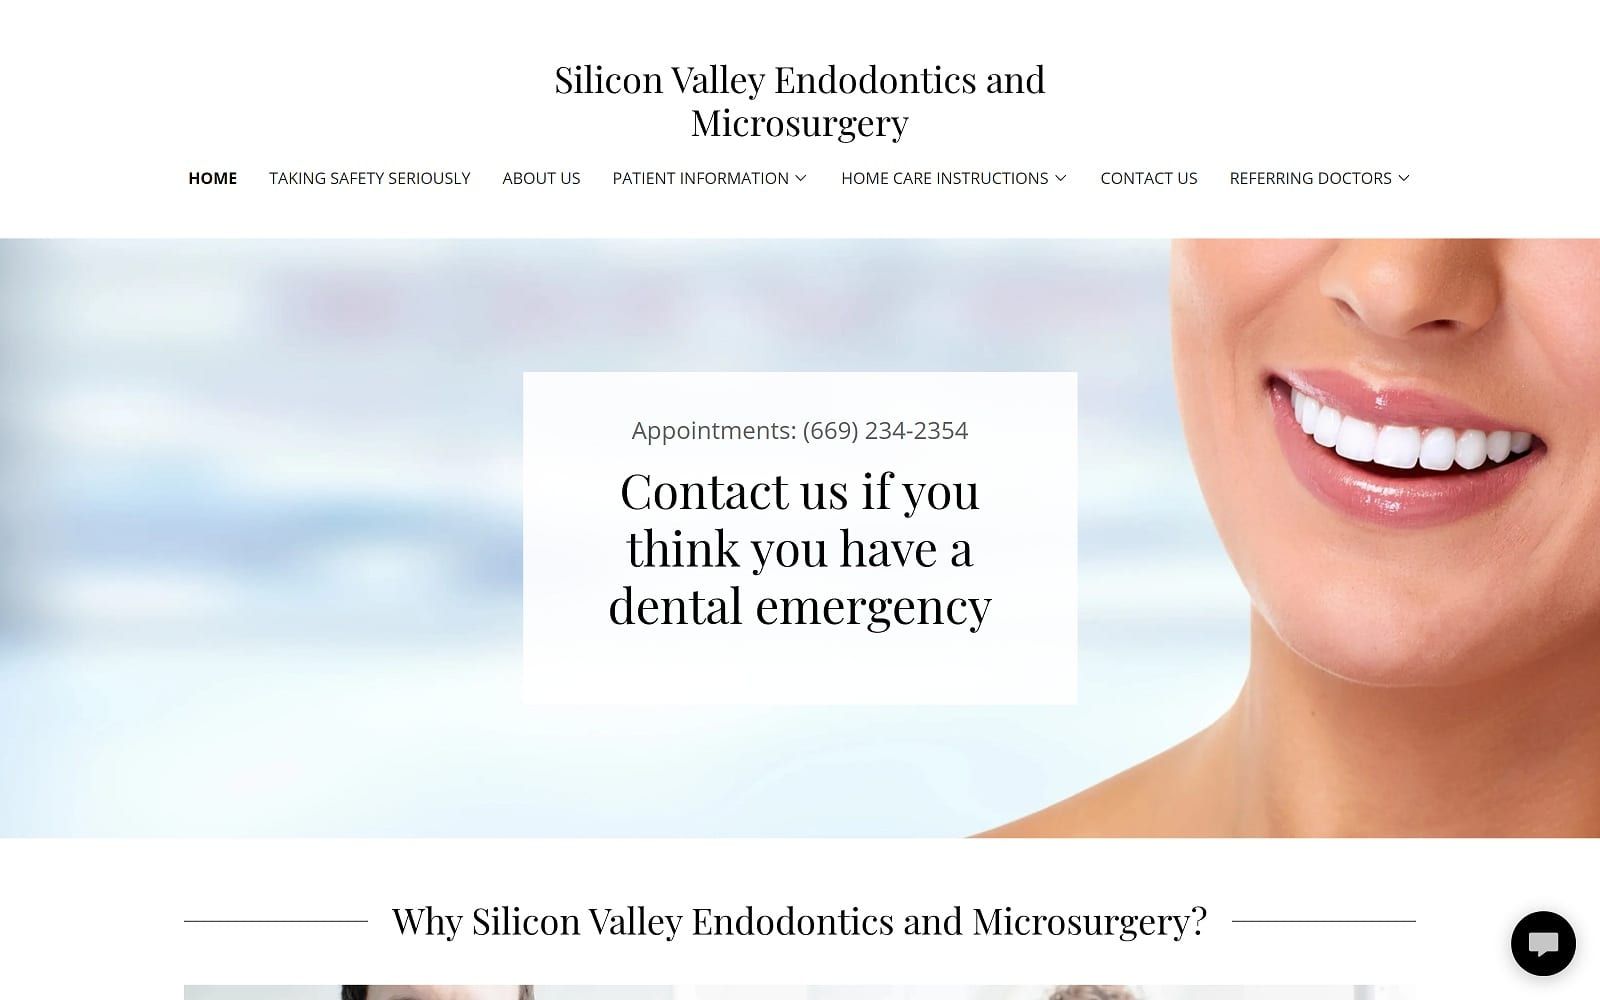 The screenshot of silicon valley endodontics and microsurgery svendodontics. Com website